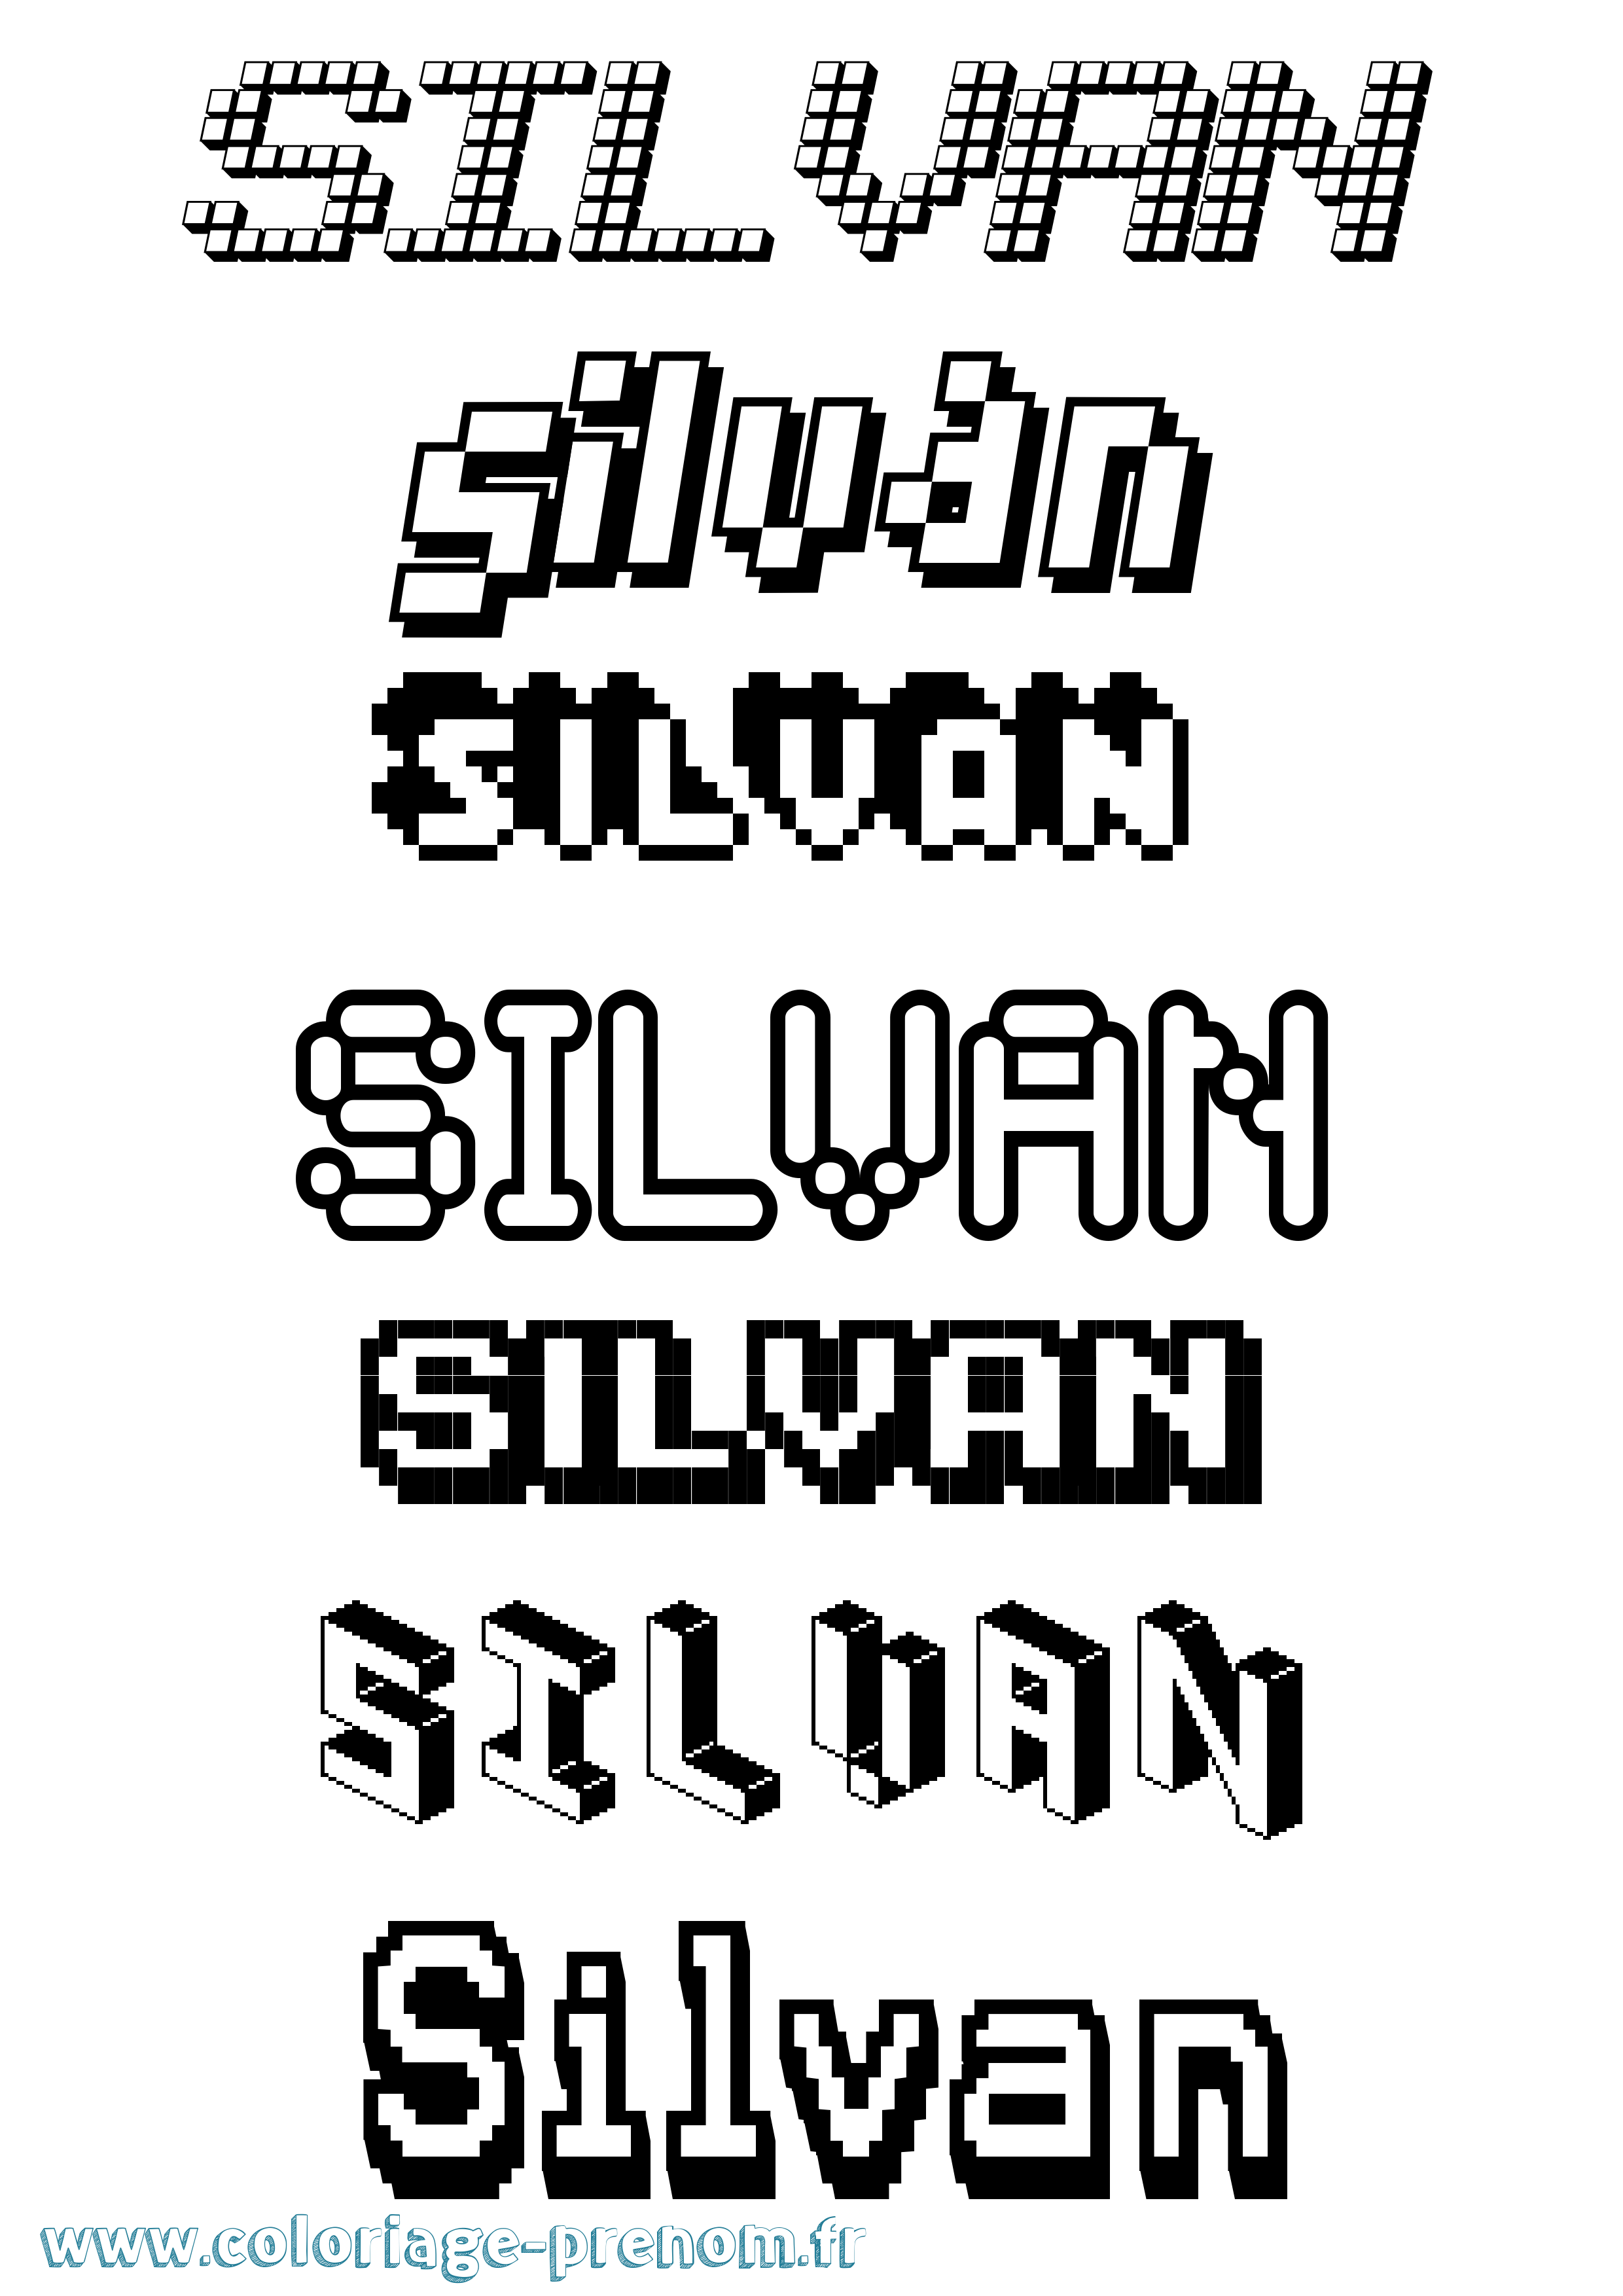 Coloriage prénom Silvan Pixel